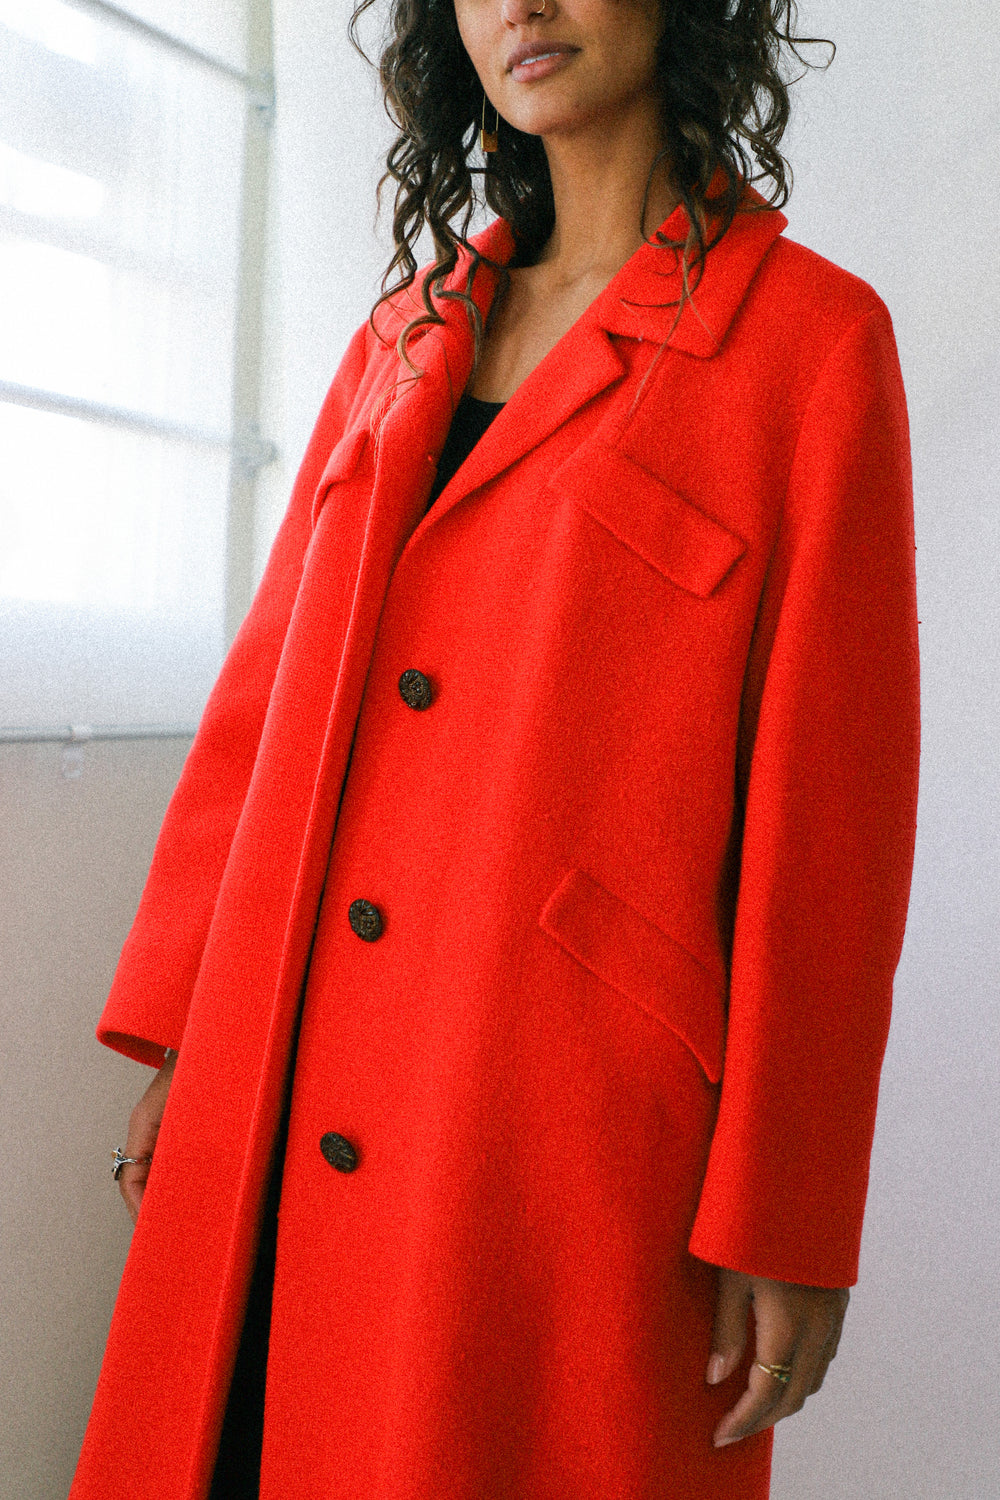 Red Hot Mod Jacket